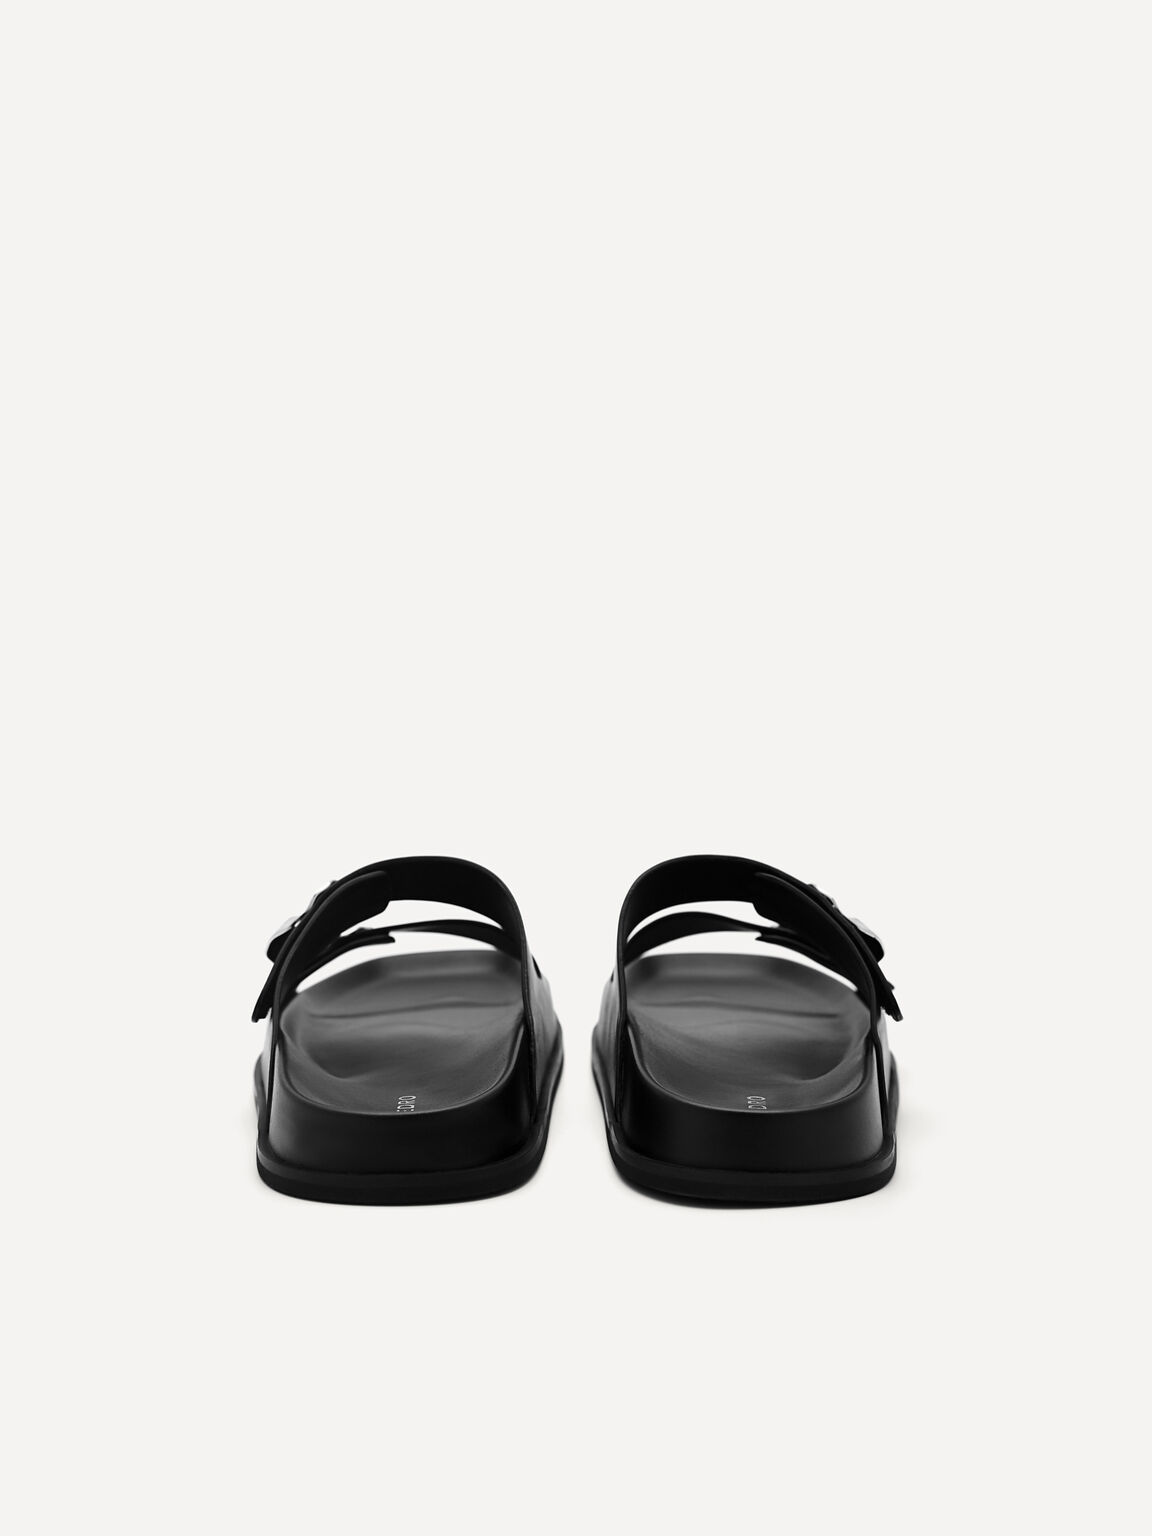 Iris Strap Sandals, Black, hi-res